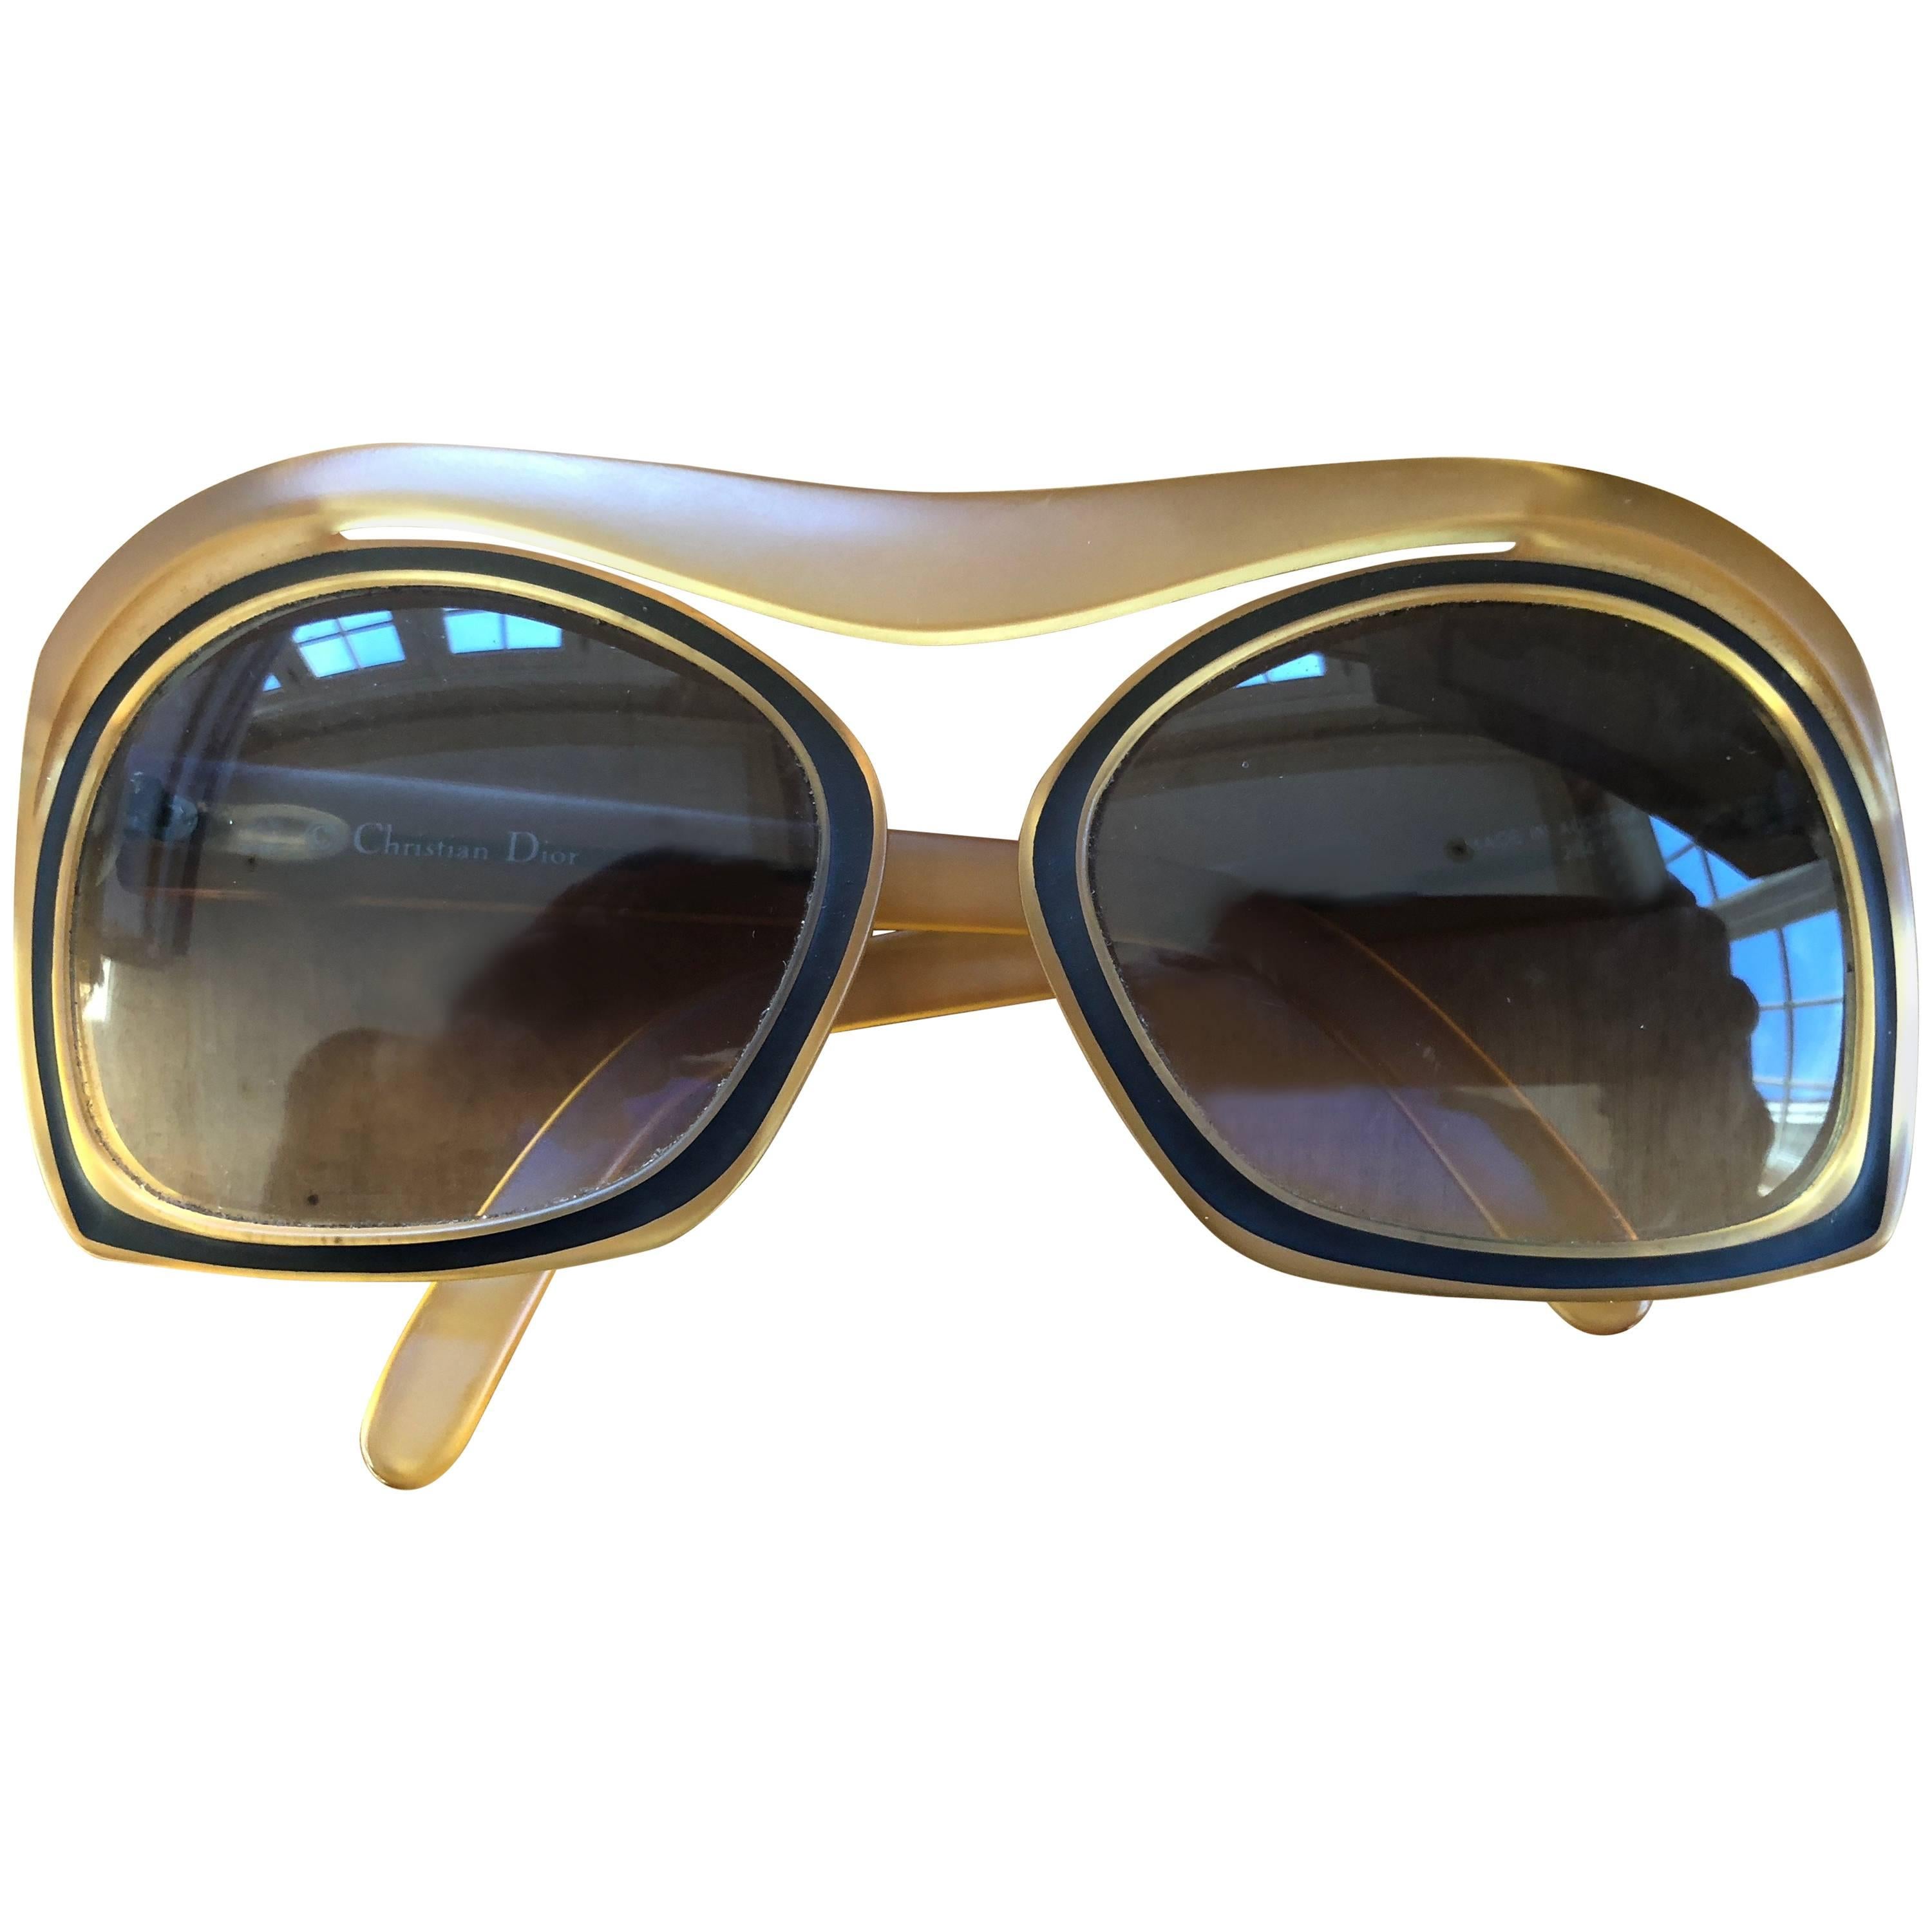 Christian Dior Futuristic 70's Vintage Oversize Sunglasses Style #2043-70 For Sale